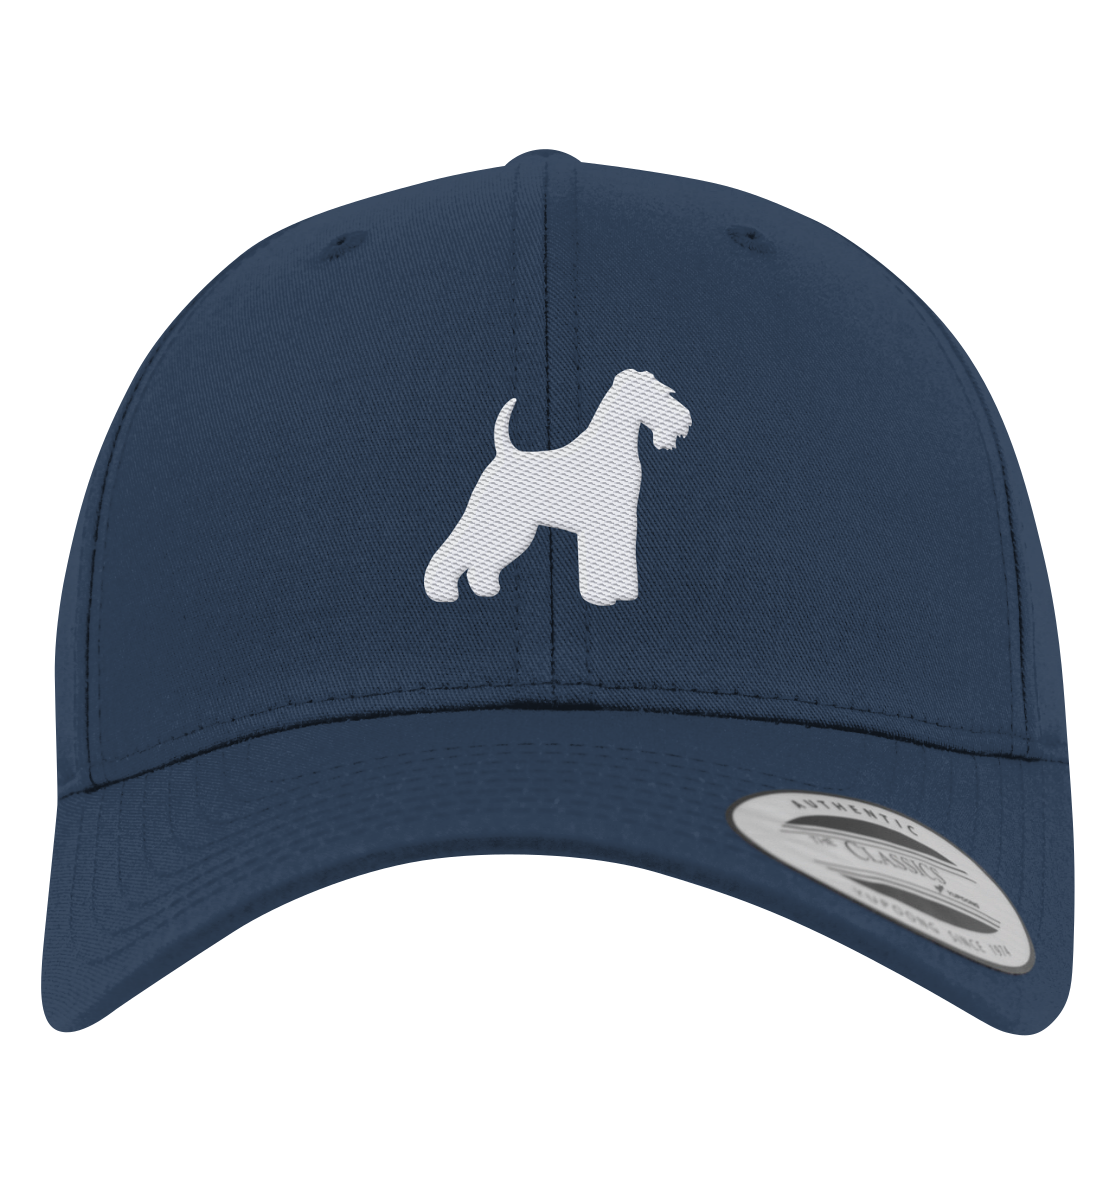 Welsh Terrier-Silhouette - Premium Baseball Cap